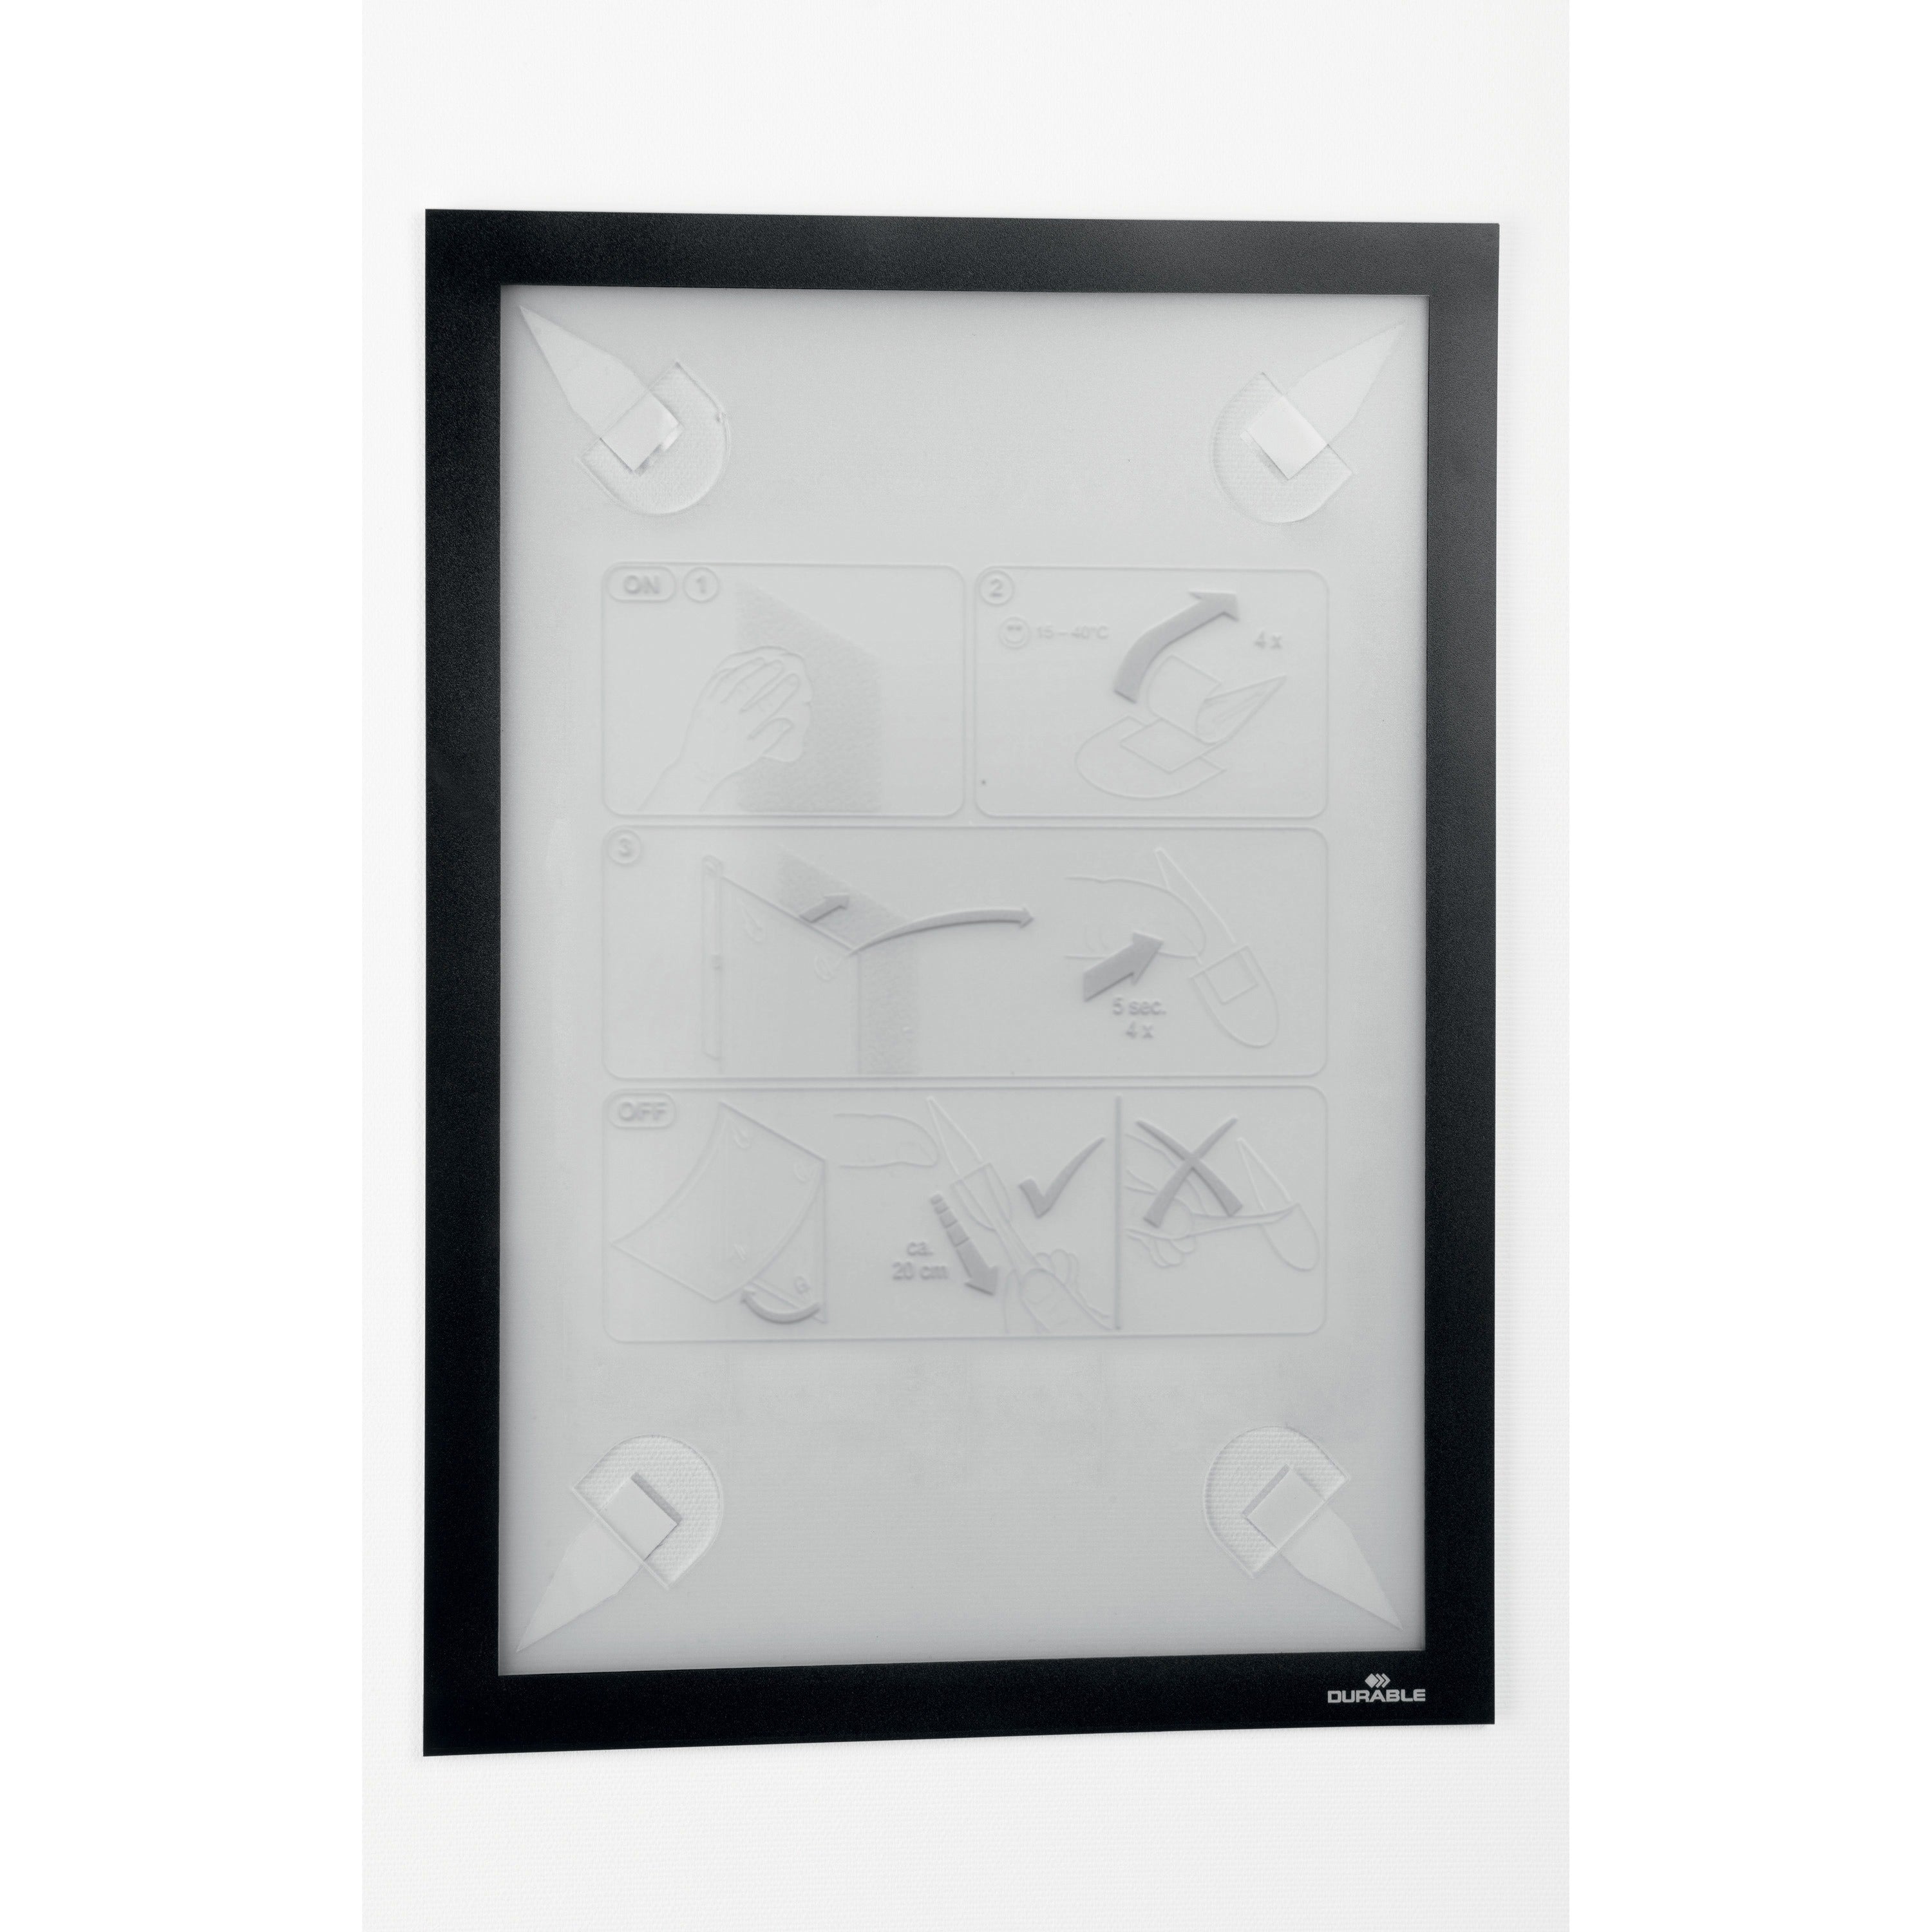 durable-duraframe-wallpaper-850-x-11-frame-size-wall-mountable-horizontal-vertical-sturdy-anti-glare-1-each-black_dbl400501 - 1